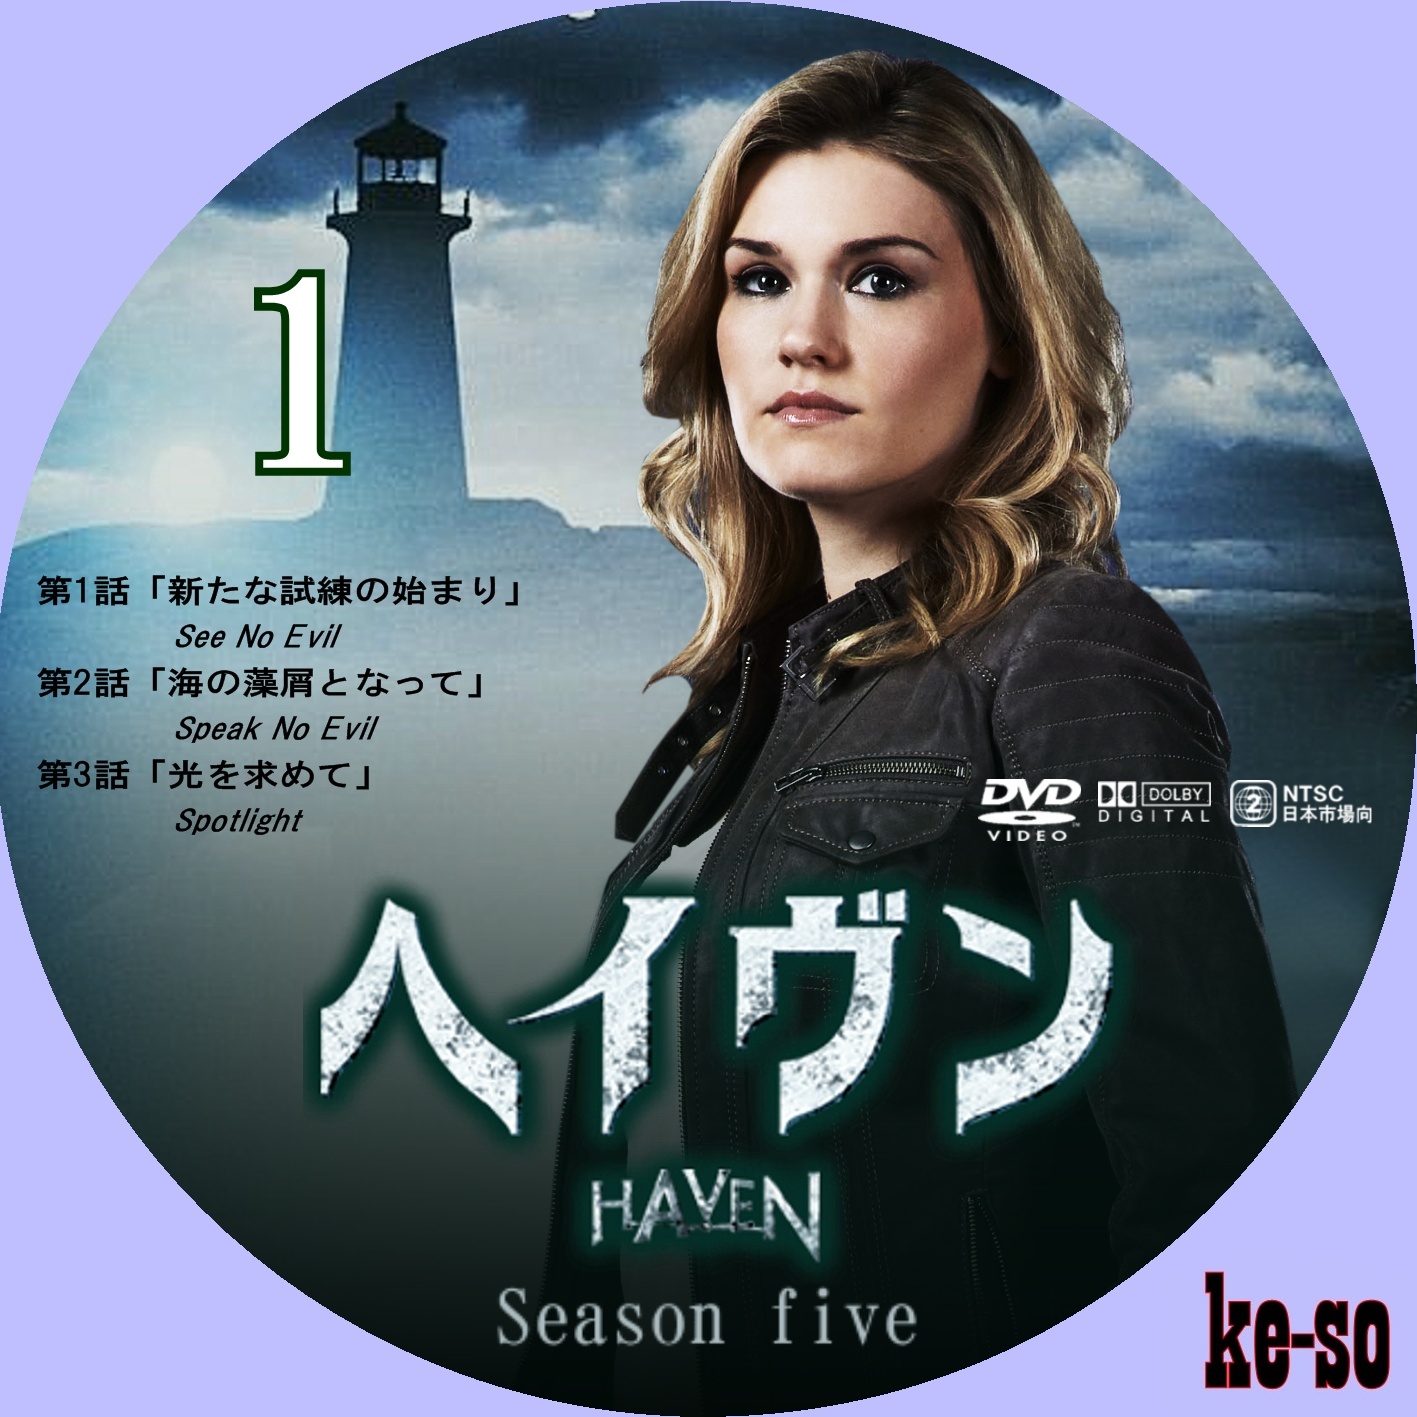 HAVEN ヘイヴン season one DVD BOX シーズン1 全巻